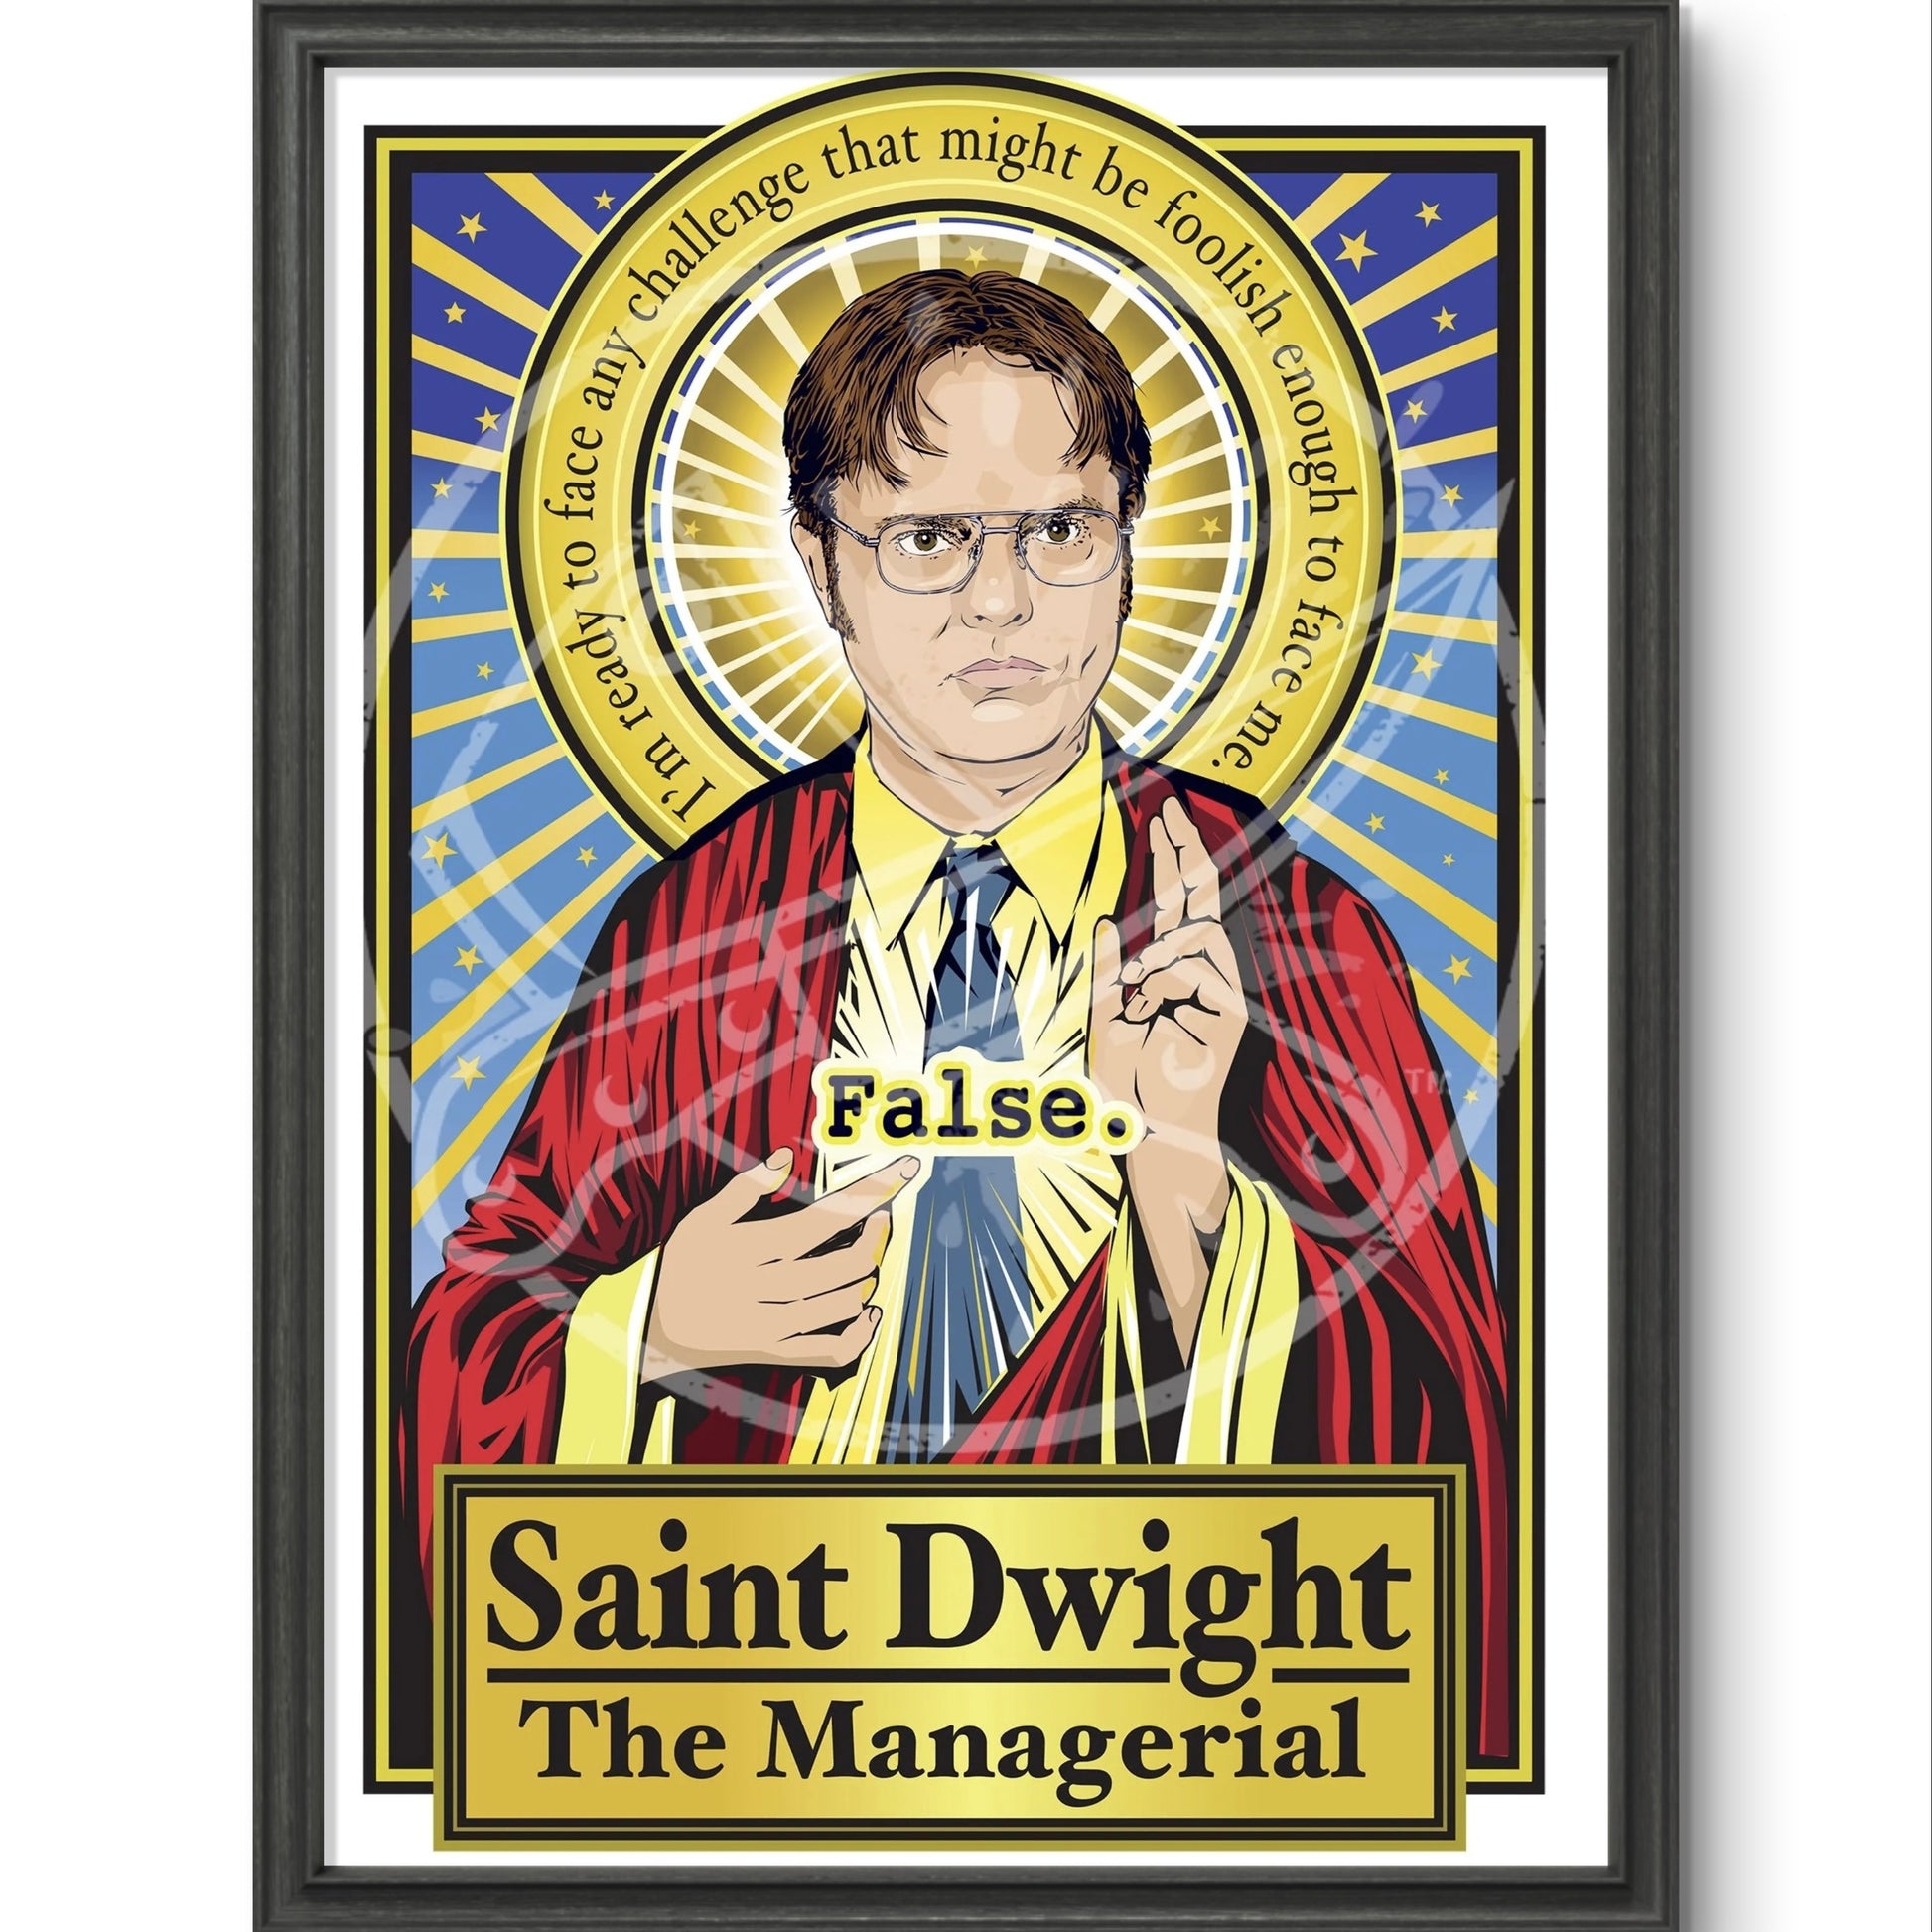 Saint Dwight The Managerial Poster Cleaverandblade.com